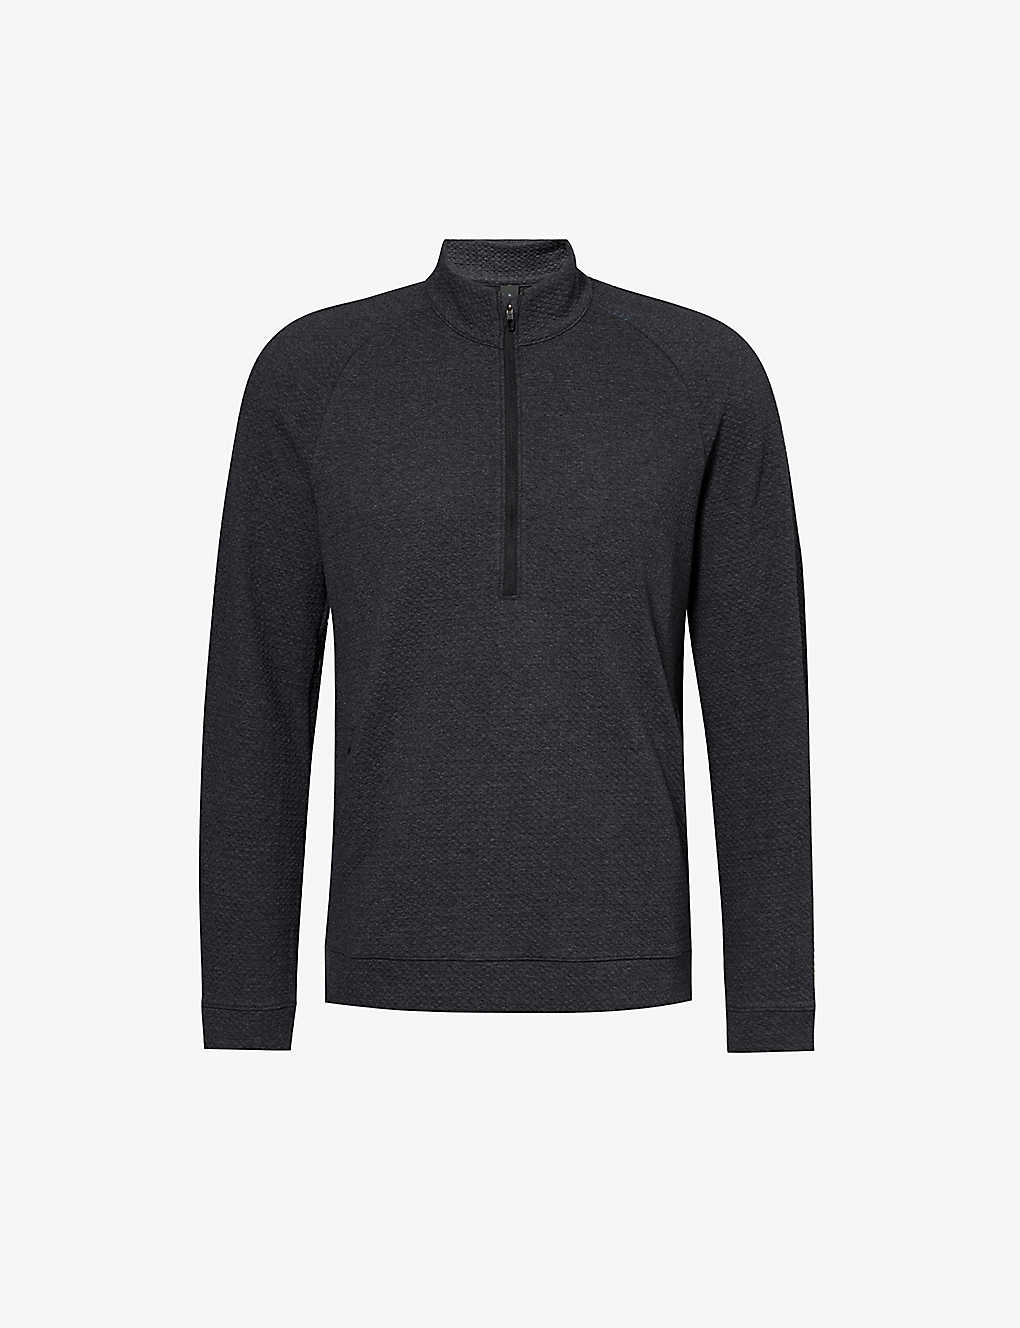 Lululemon Textured Knit Half-zip Sweater In Black